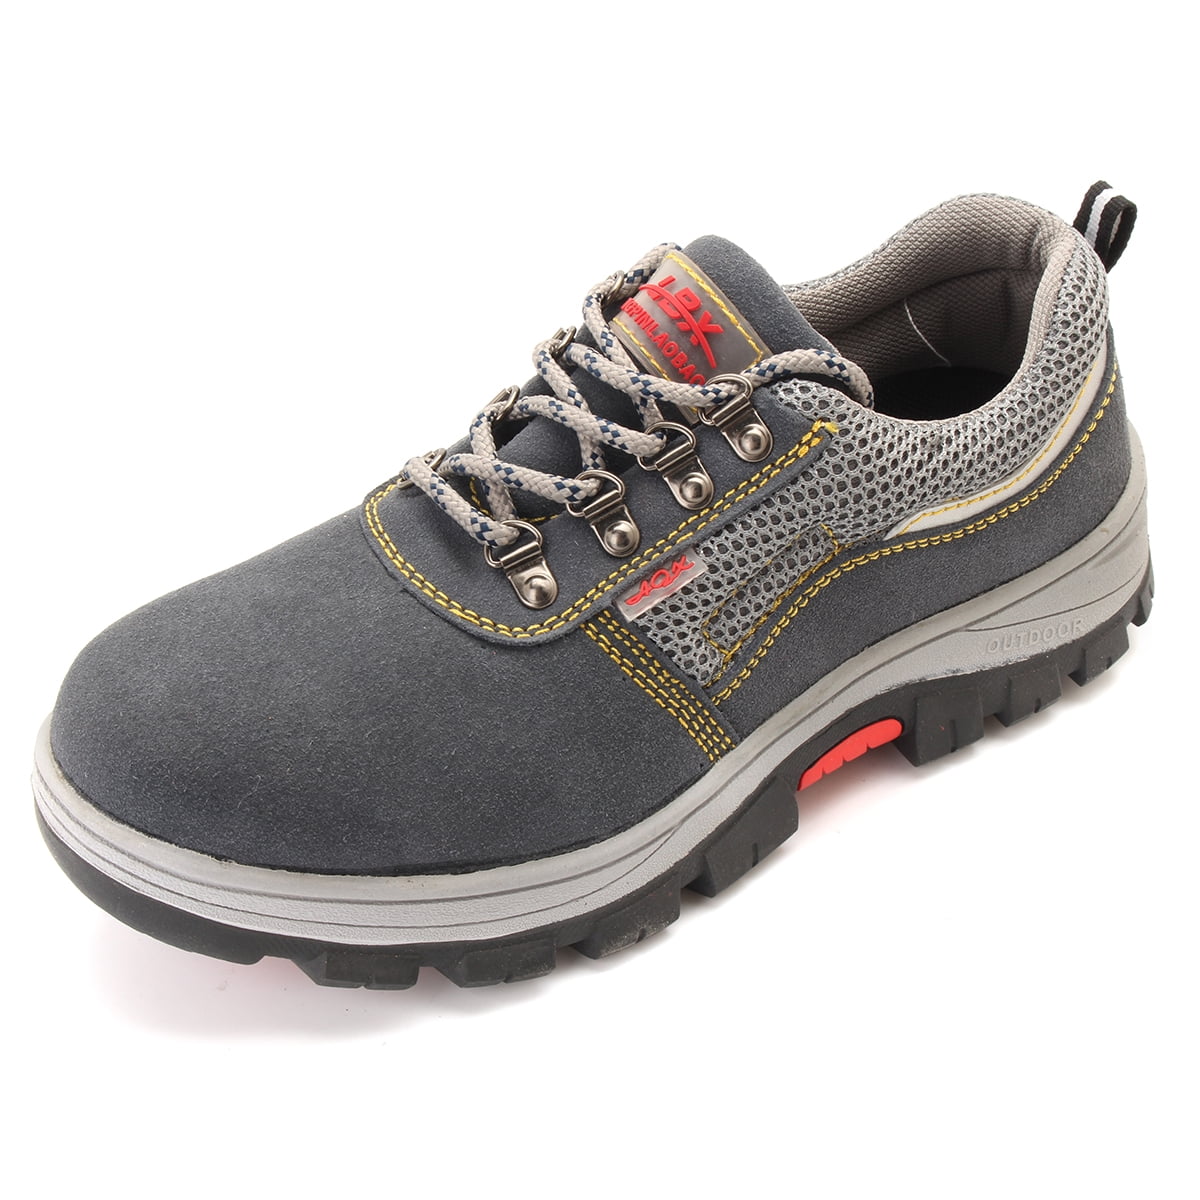 Men's Steel Toe Shoes Safety Shoe Work Shoes | Walmart Canada